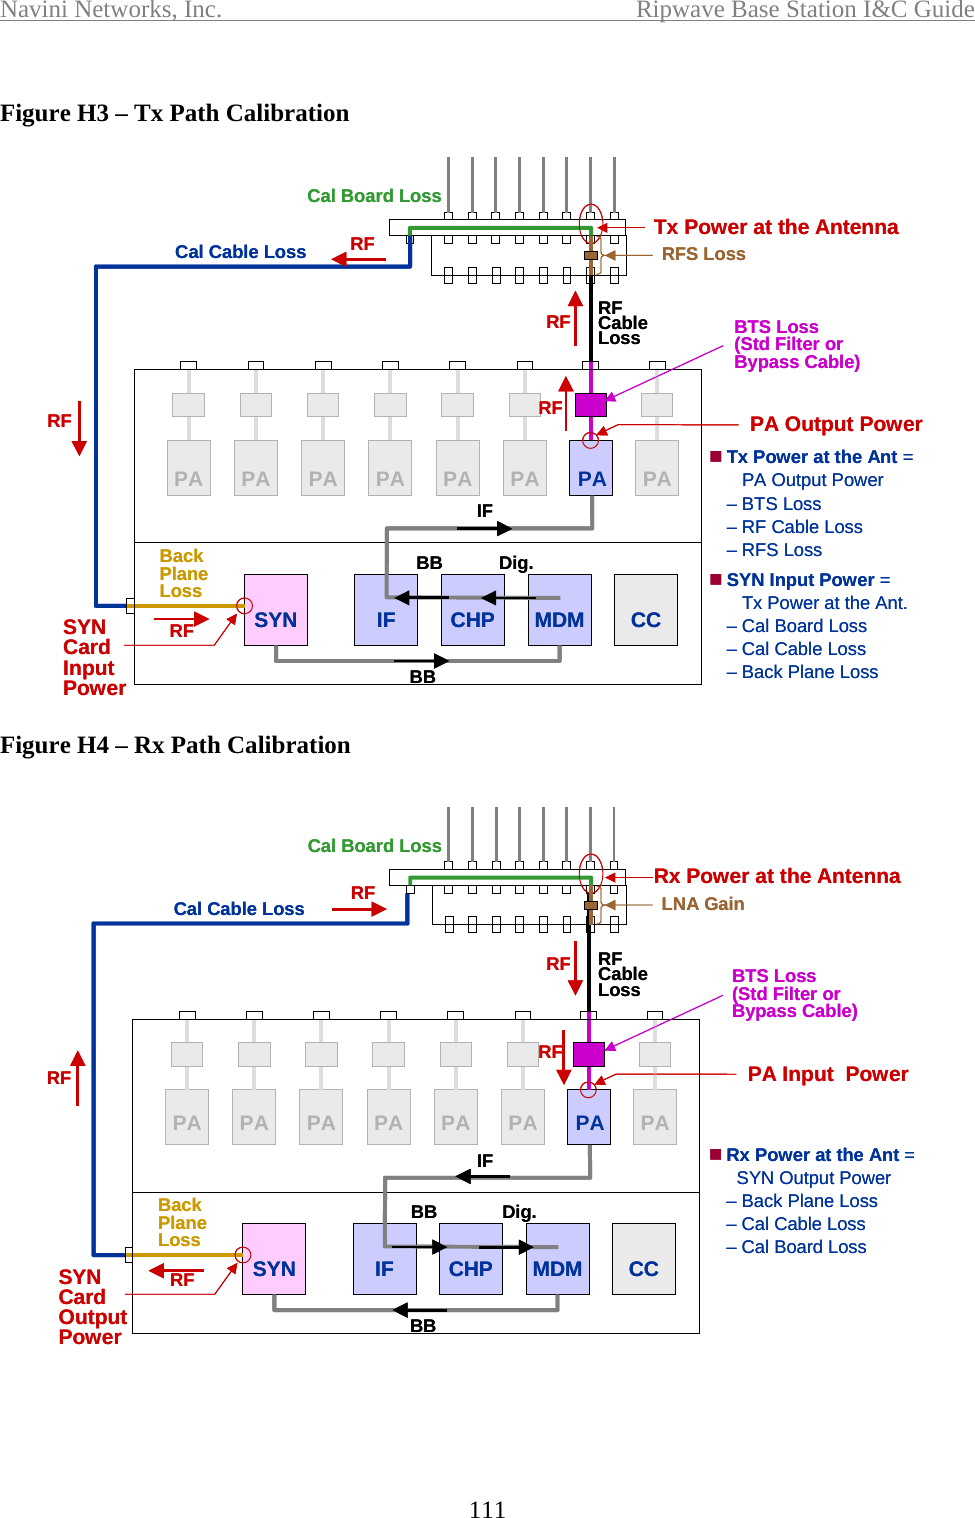 Navini Networks, Inc.  Ripwave Base Station I&amp;C Guide  111  Figure H3 – Tx Path Calibration                      Figure H4 – Rx Path Calibration    Rx Power at the Ant =SYN Output Power– Back Plane Loss– Cal Cable Loss– Cal Board LossCCMDMCHPIFSYNPAPAPAPAPAPAPAPACal Cable LossBackPlaneLossPA Input  PowerBTS Loss(Std Filter orBypass Cable)Rx Power at the AntennaCal Board LossRFCableLossLNA GainSYN CardOutput Power BBRFRFRFRFIFBBRFDig.Rx Power at the Ant =SYN Output Power– Back Plane Loss– Cal Cable Loss– Cal Board LossCCMDMCHPIFSYN CCMDMCHPIFSYNPAPAPAPAPAPAPAPACal Cable LossBackPlaneLossPA Input  PowerBTS Loss(Std Filter orBypass Cable)Rx Power at the AntennaCal Board LossRFCableLossLNA GainSYN CardOutput Power BBRFRFRFRFIFBBRFDig.Tx Power at the Ant =PA Output Power– BTS Loss– RF Cable Loss–RFS LossSYN Input Power =Tx Power at the Ant.– Cal Board Loss– Cal Cable Loss– Back Plane LossCCMDMCHPIFSYNPAPAPAPAPAPAPAPATx Power at the AntennaCal Board LossCal Cable LossBackPlaneLossRFCableLossPA Output PowerSYN CardInput PowerBTS Loss(Std Filter orBypass Cable)RFS LossRFRFRFRFIFRFBBBB Dig.Tx Power at the Ant =PA Output Power– BTS Loss– RF Cable Loss–RFS LossSYN Input Power =Tx Power at the Ant.– Cal Board Loss– Cal Cable Loss– Back Plane LossCCMDMCHPIFSYN CCMDMCHPIFSYNPAPAPAPAPAPAPAPATx Power at the AntennaCal Board LossCal Cable LossBackPlaneLossRFCableLossPA Output PowerSYN CardInput PowerBTS Loss(Std Filter orBypass Cable)RFS LossRFRFRFRFIFRFBBBB Dig.